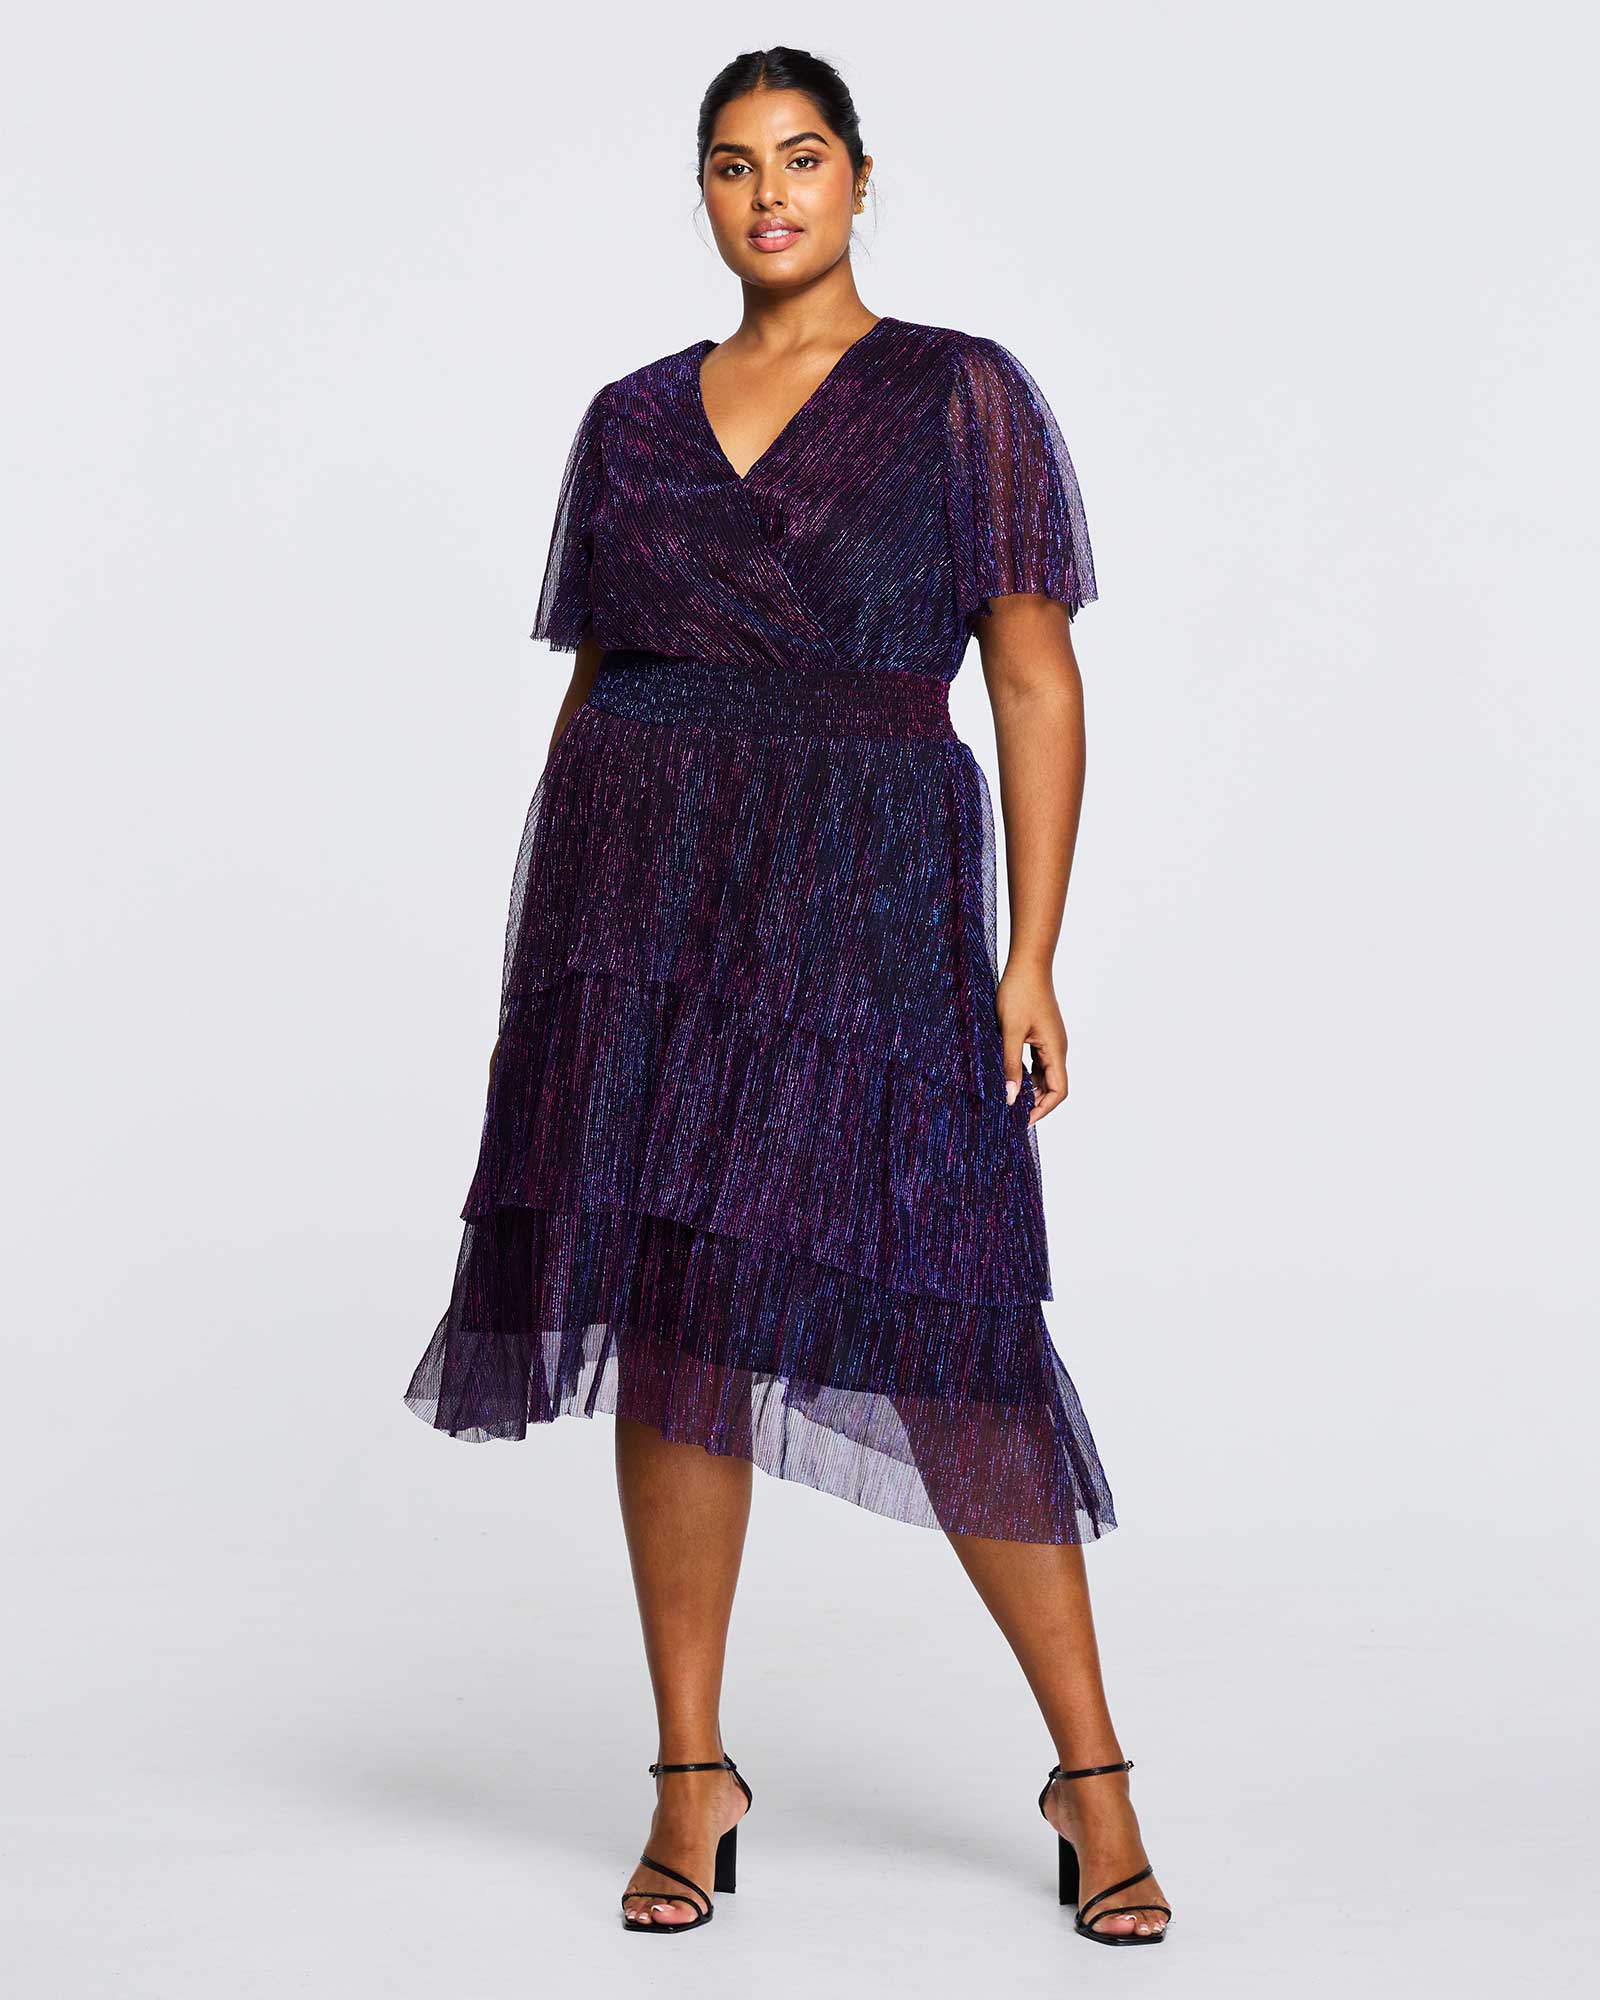 A plus size woman wearing the Glitterland metallic sparkly purple tulle midi dress.